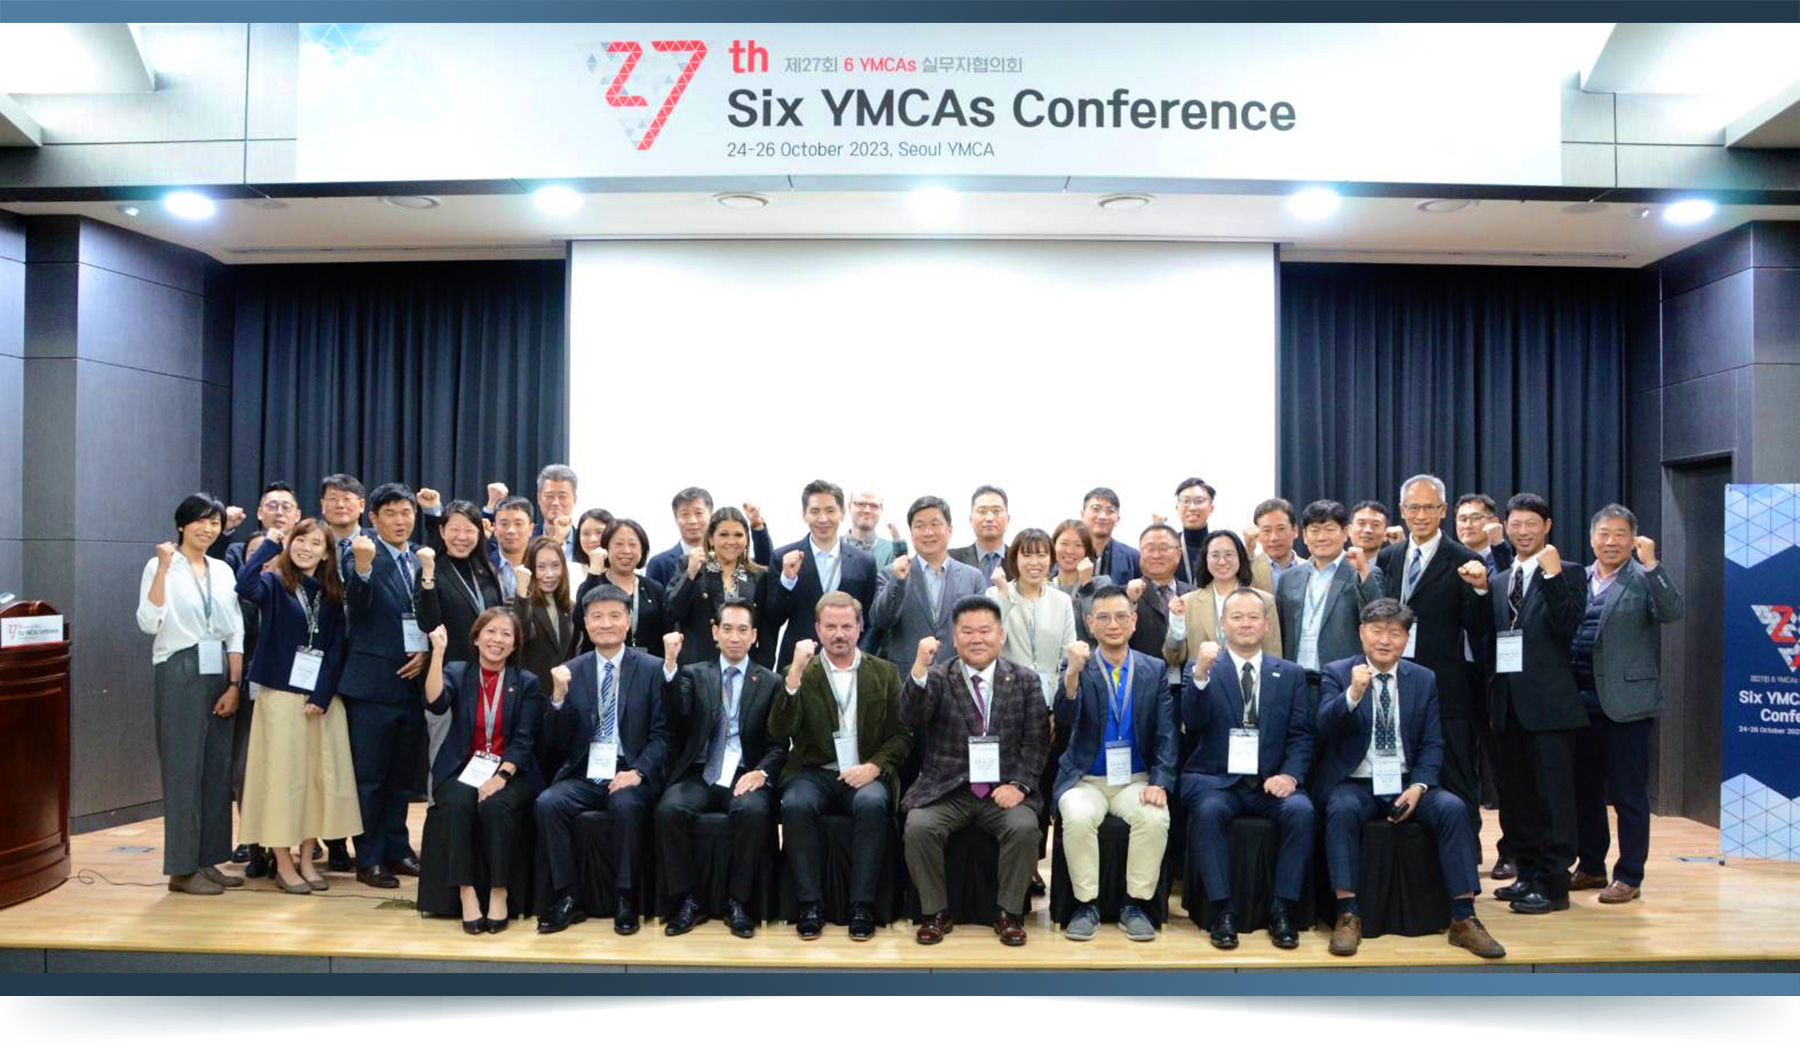  Six YMCAs Conference,2023YMCA六城市會議,YMCA六地會議,서울YMCA,YMCA International, YMCA international exchange,Taipei YMCA International Conference,Asia YMCA International Conference,Seoul YMCA